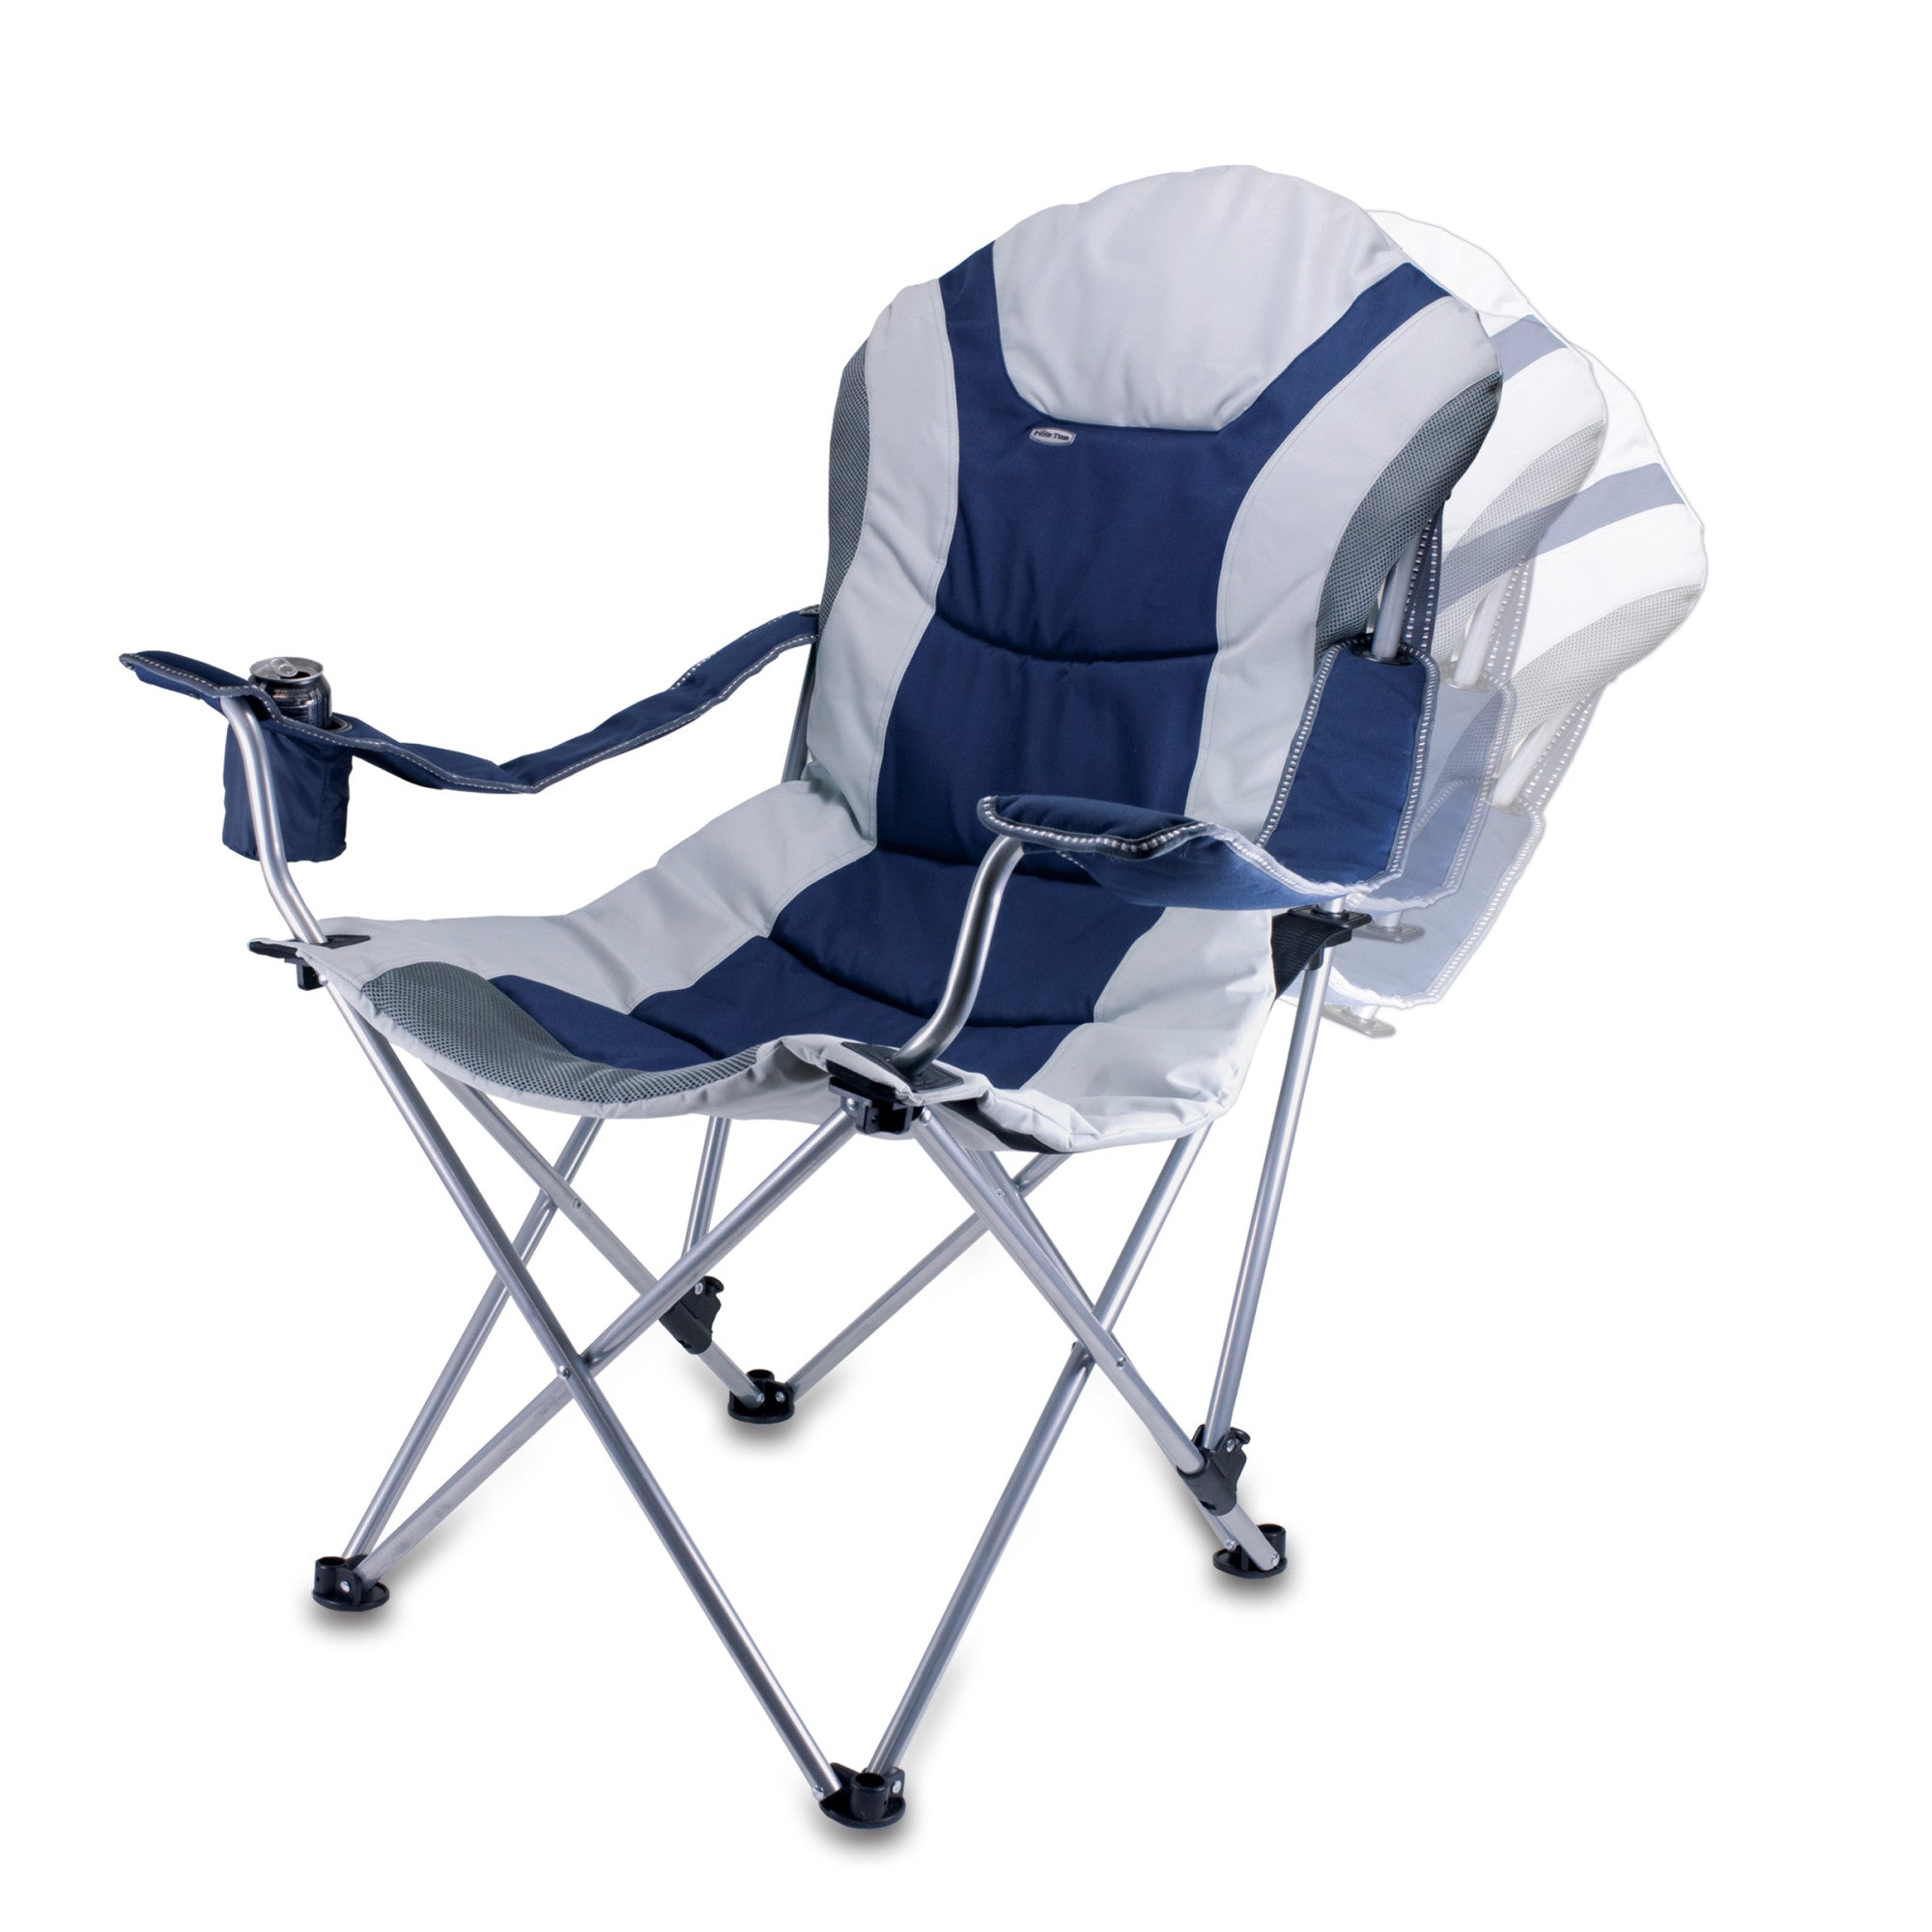 Denver Broncos - Reclining Camp Chair